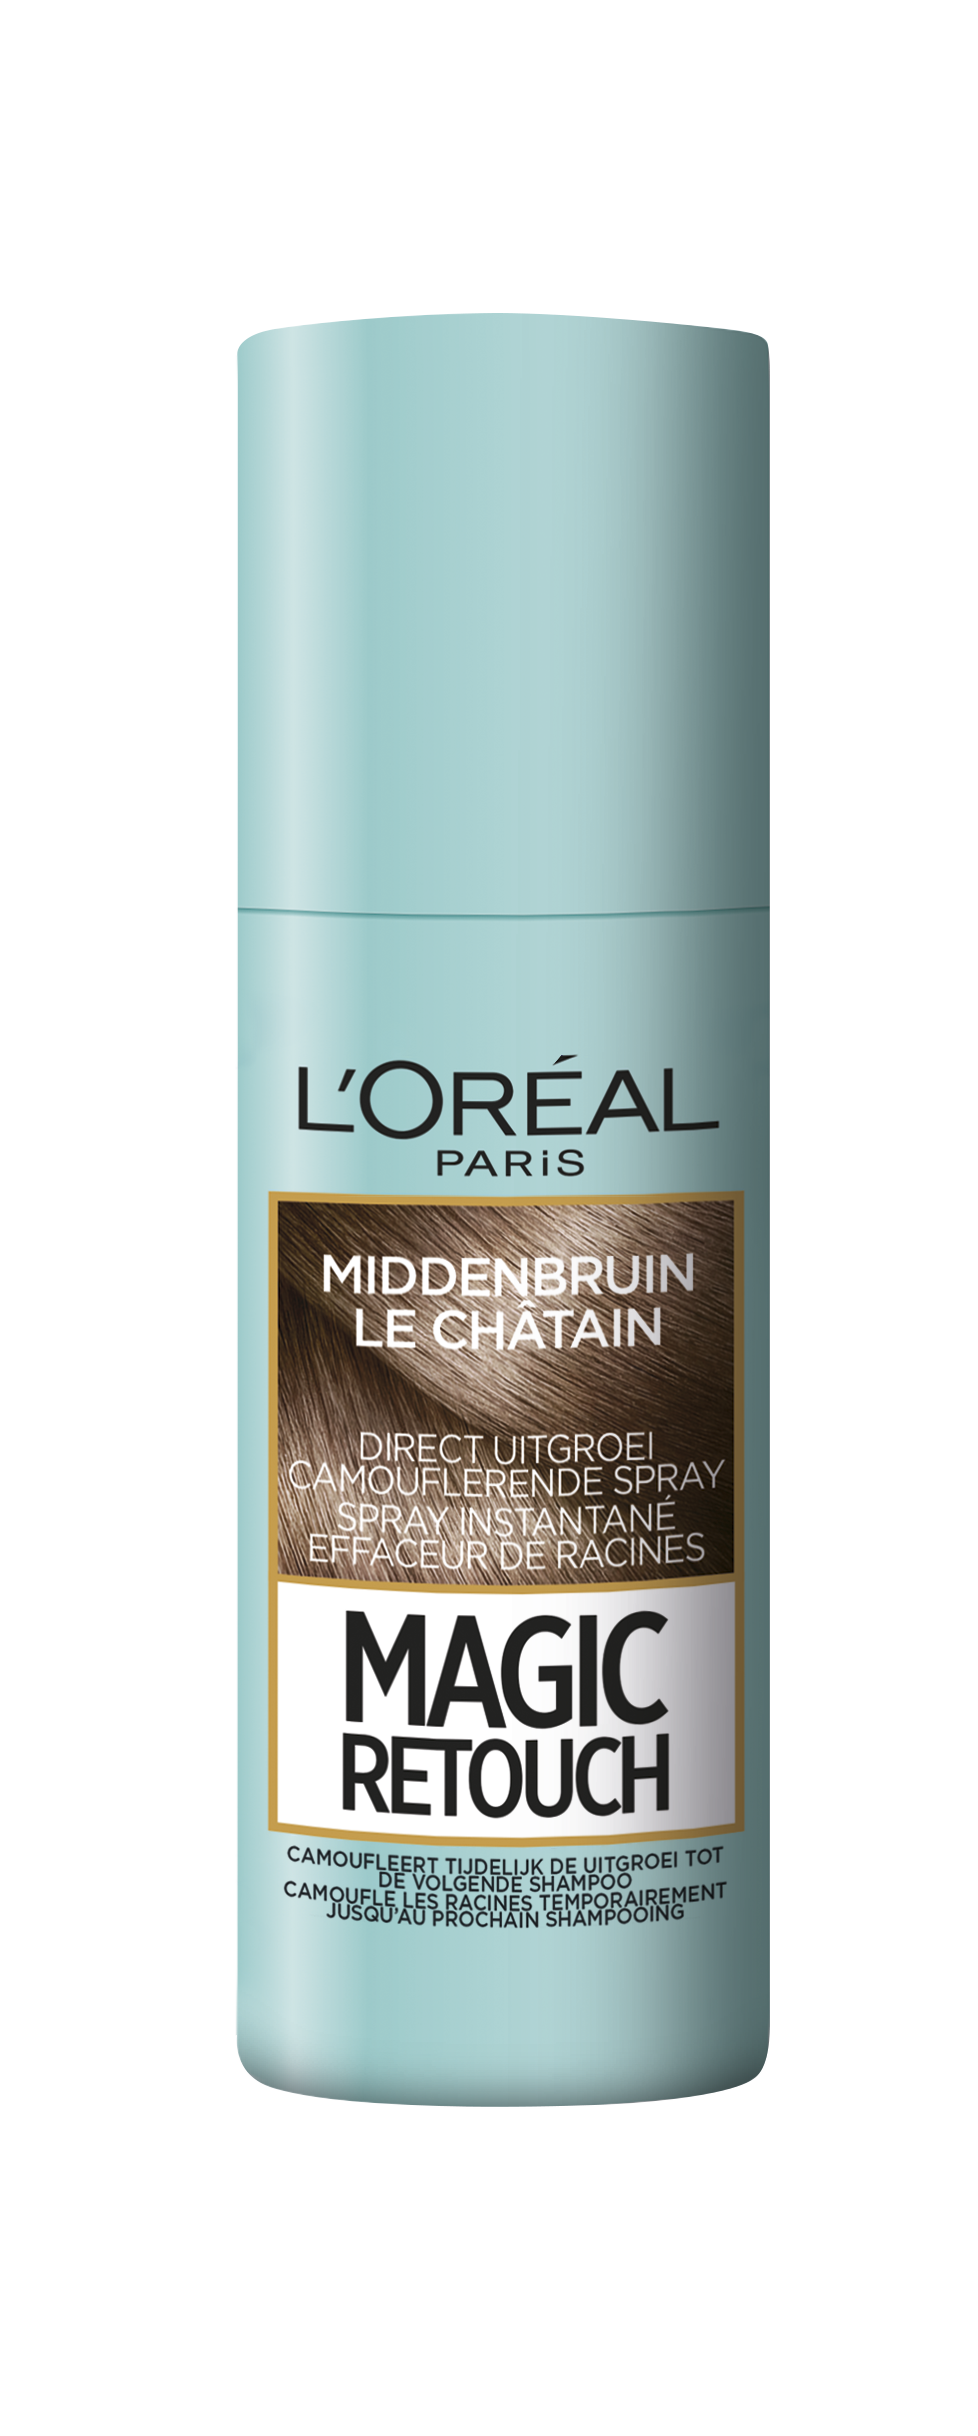 L'Oréal Magic Retouch Middenbruin - camouflerende uitgroei spray - 75ml